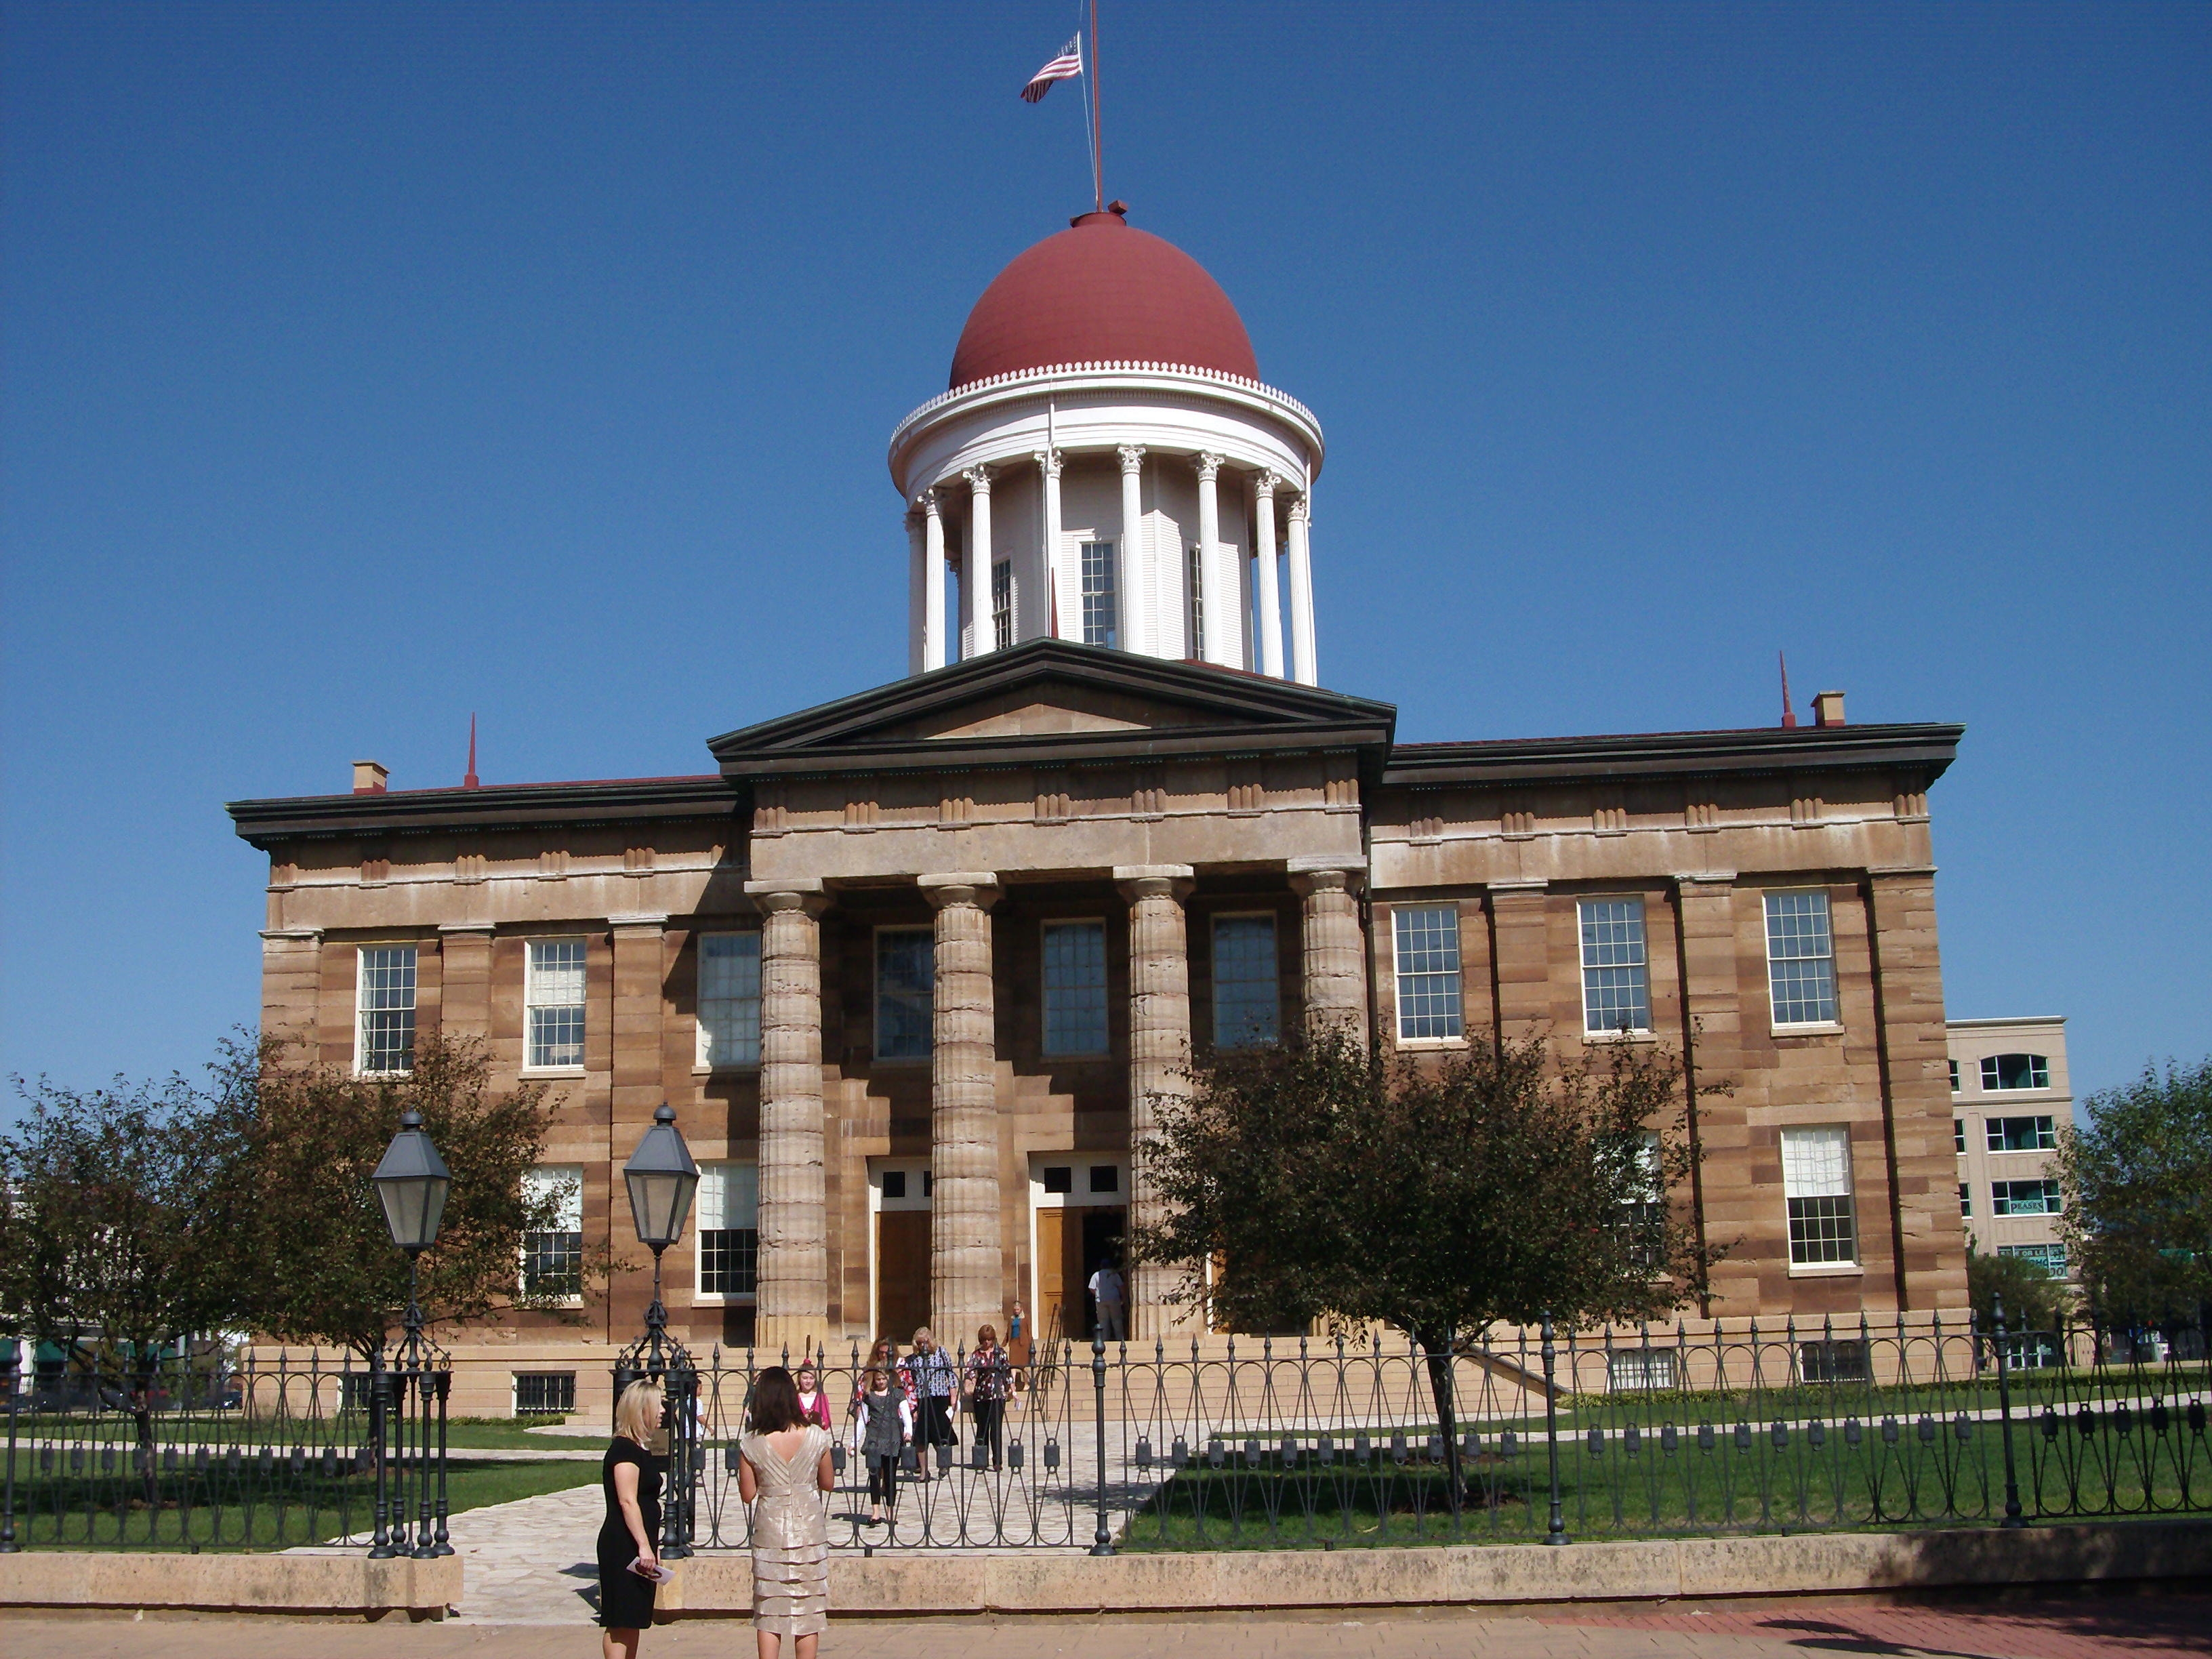 Old Illinois State Capitol Building - - Springfield, Illinois